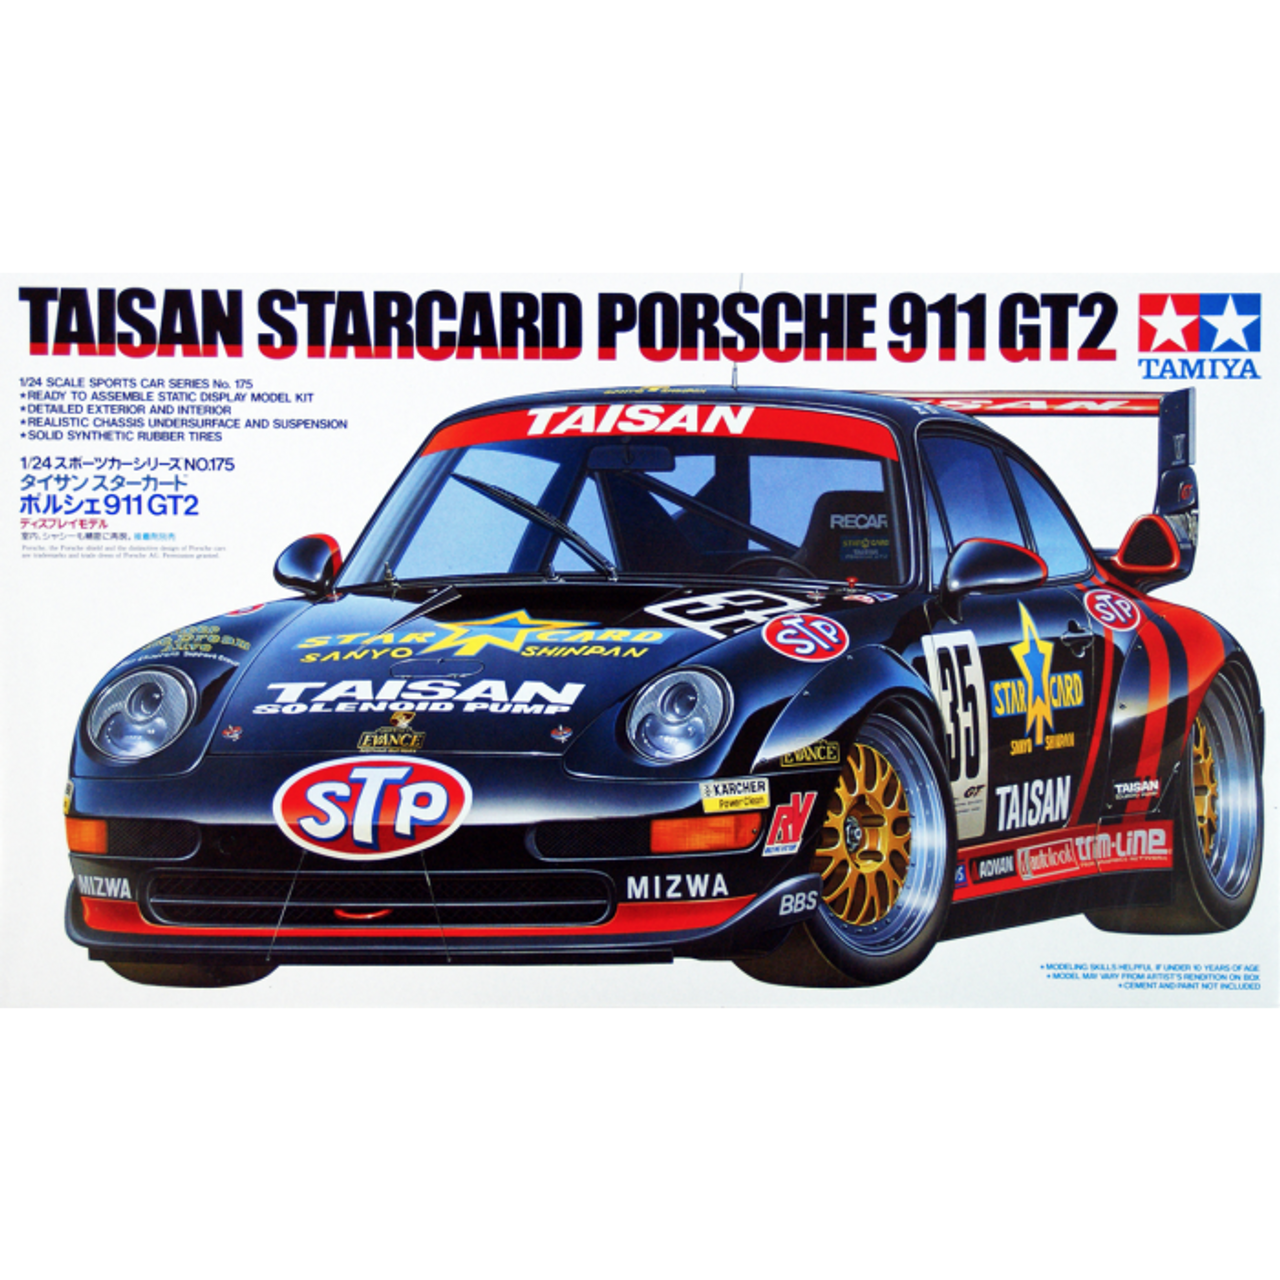 Tamiya 1/24 Taisan Starcard Porsche 911GT2 Plastic Model Kit NEW from Japan